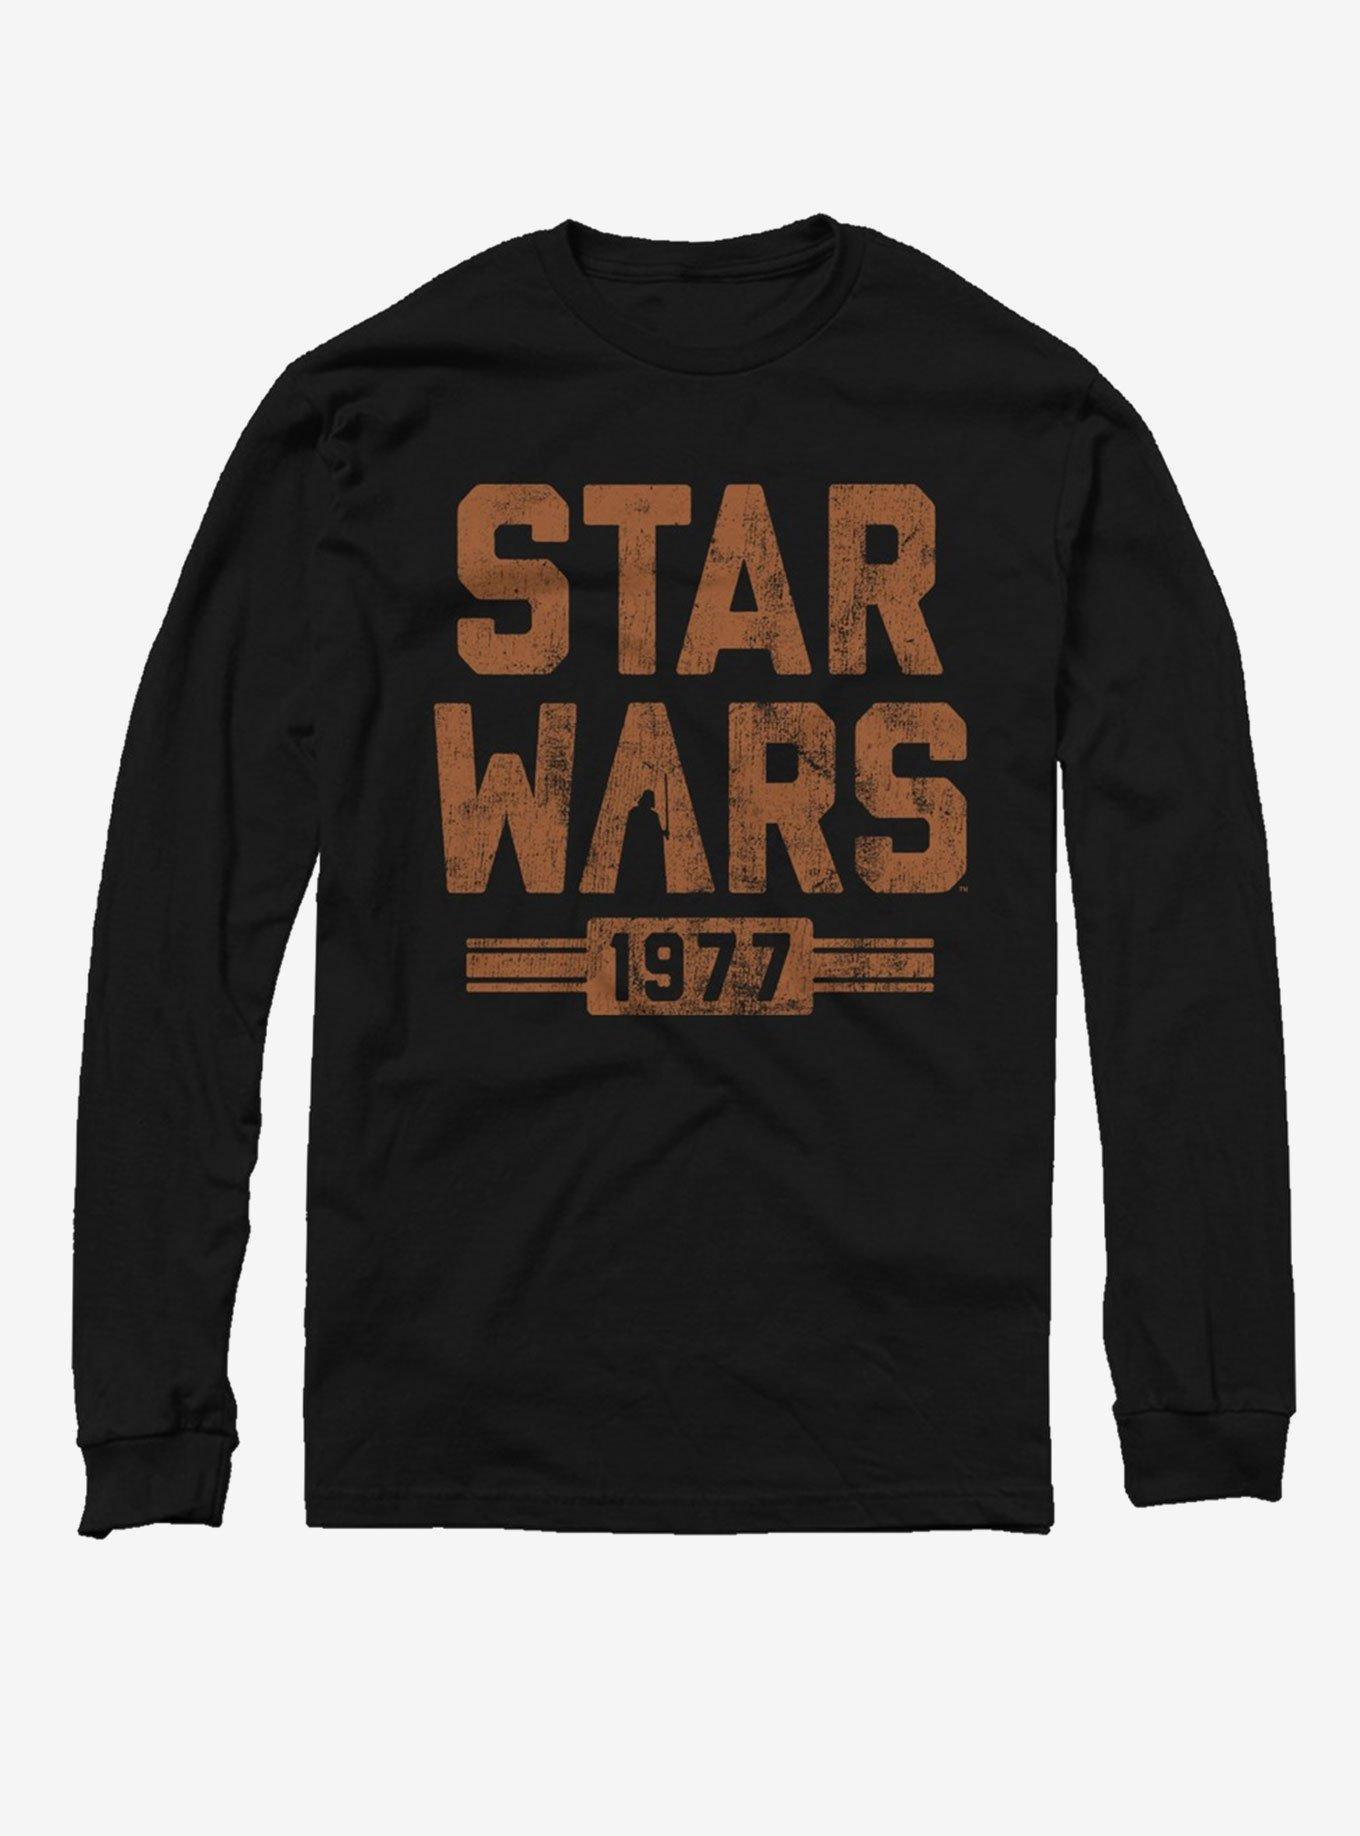 Star Wars Road Crew Long-Sleeve T-Shirt